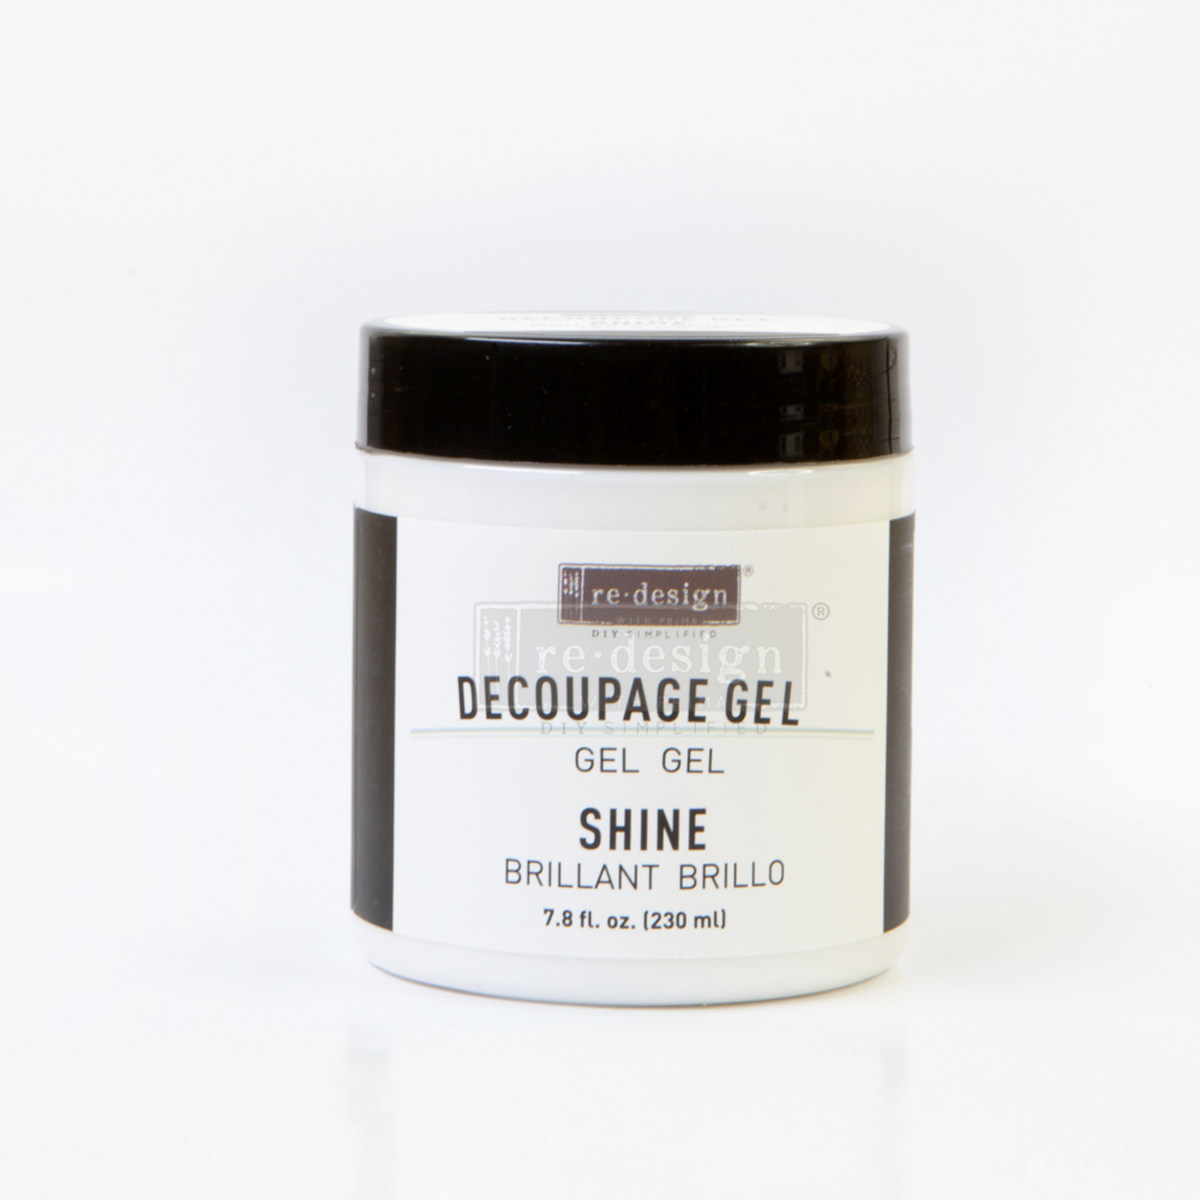 Decoupage Gel Shine – 1 Jar, 230ml